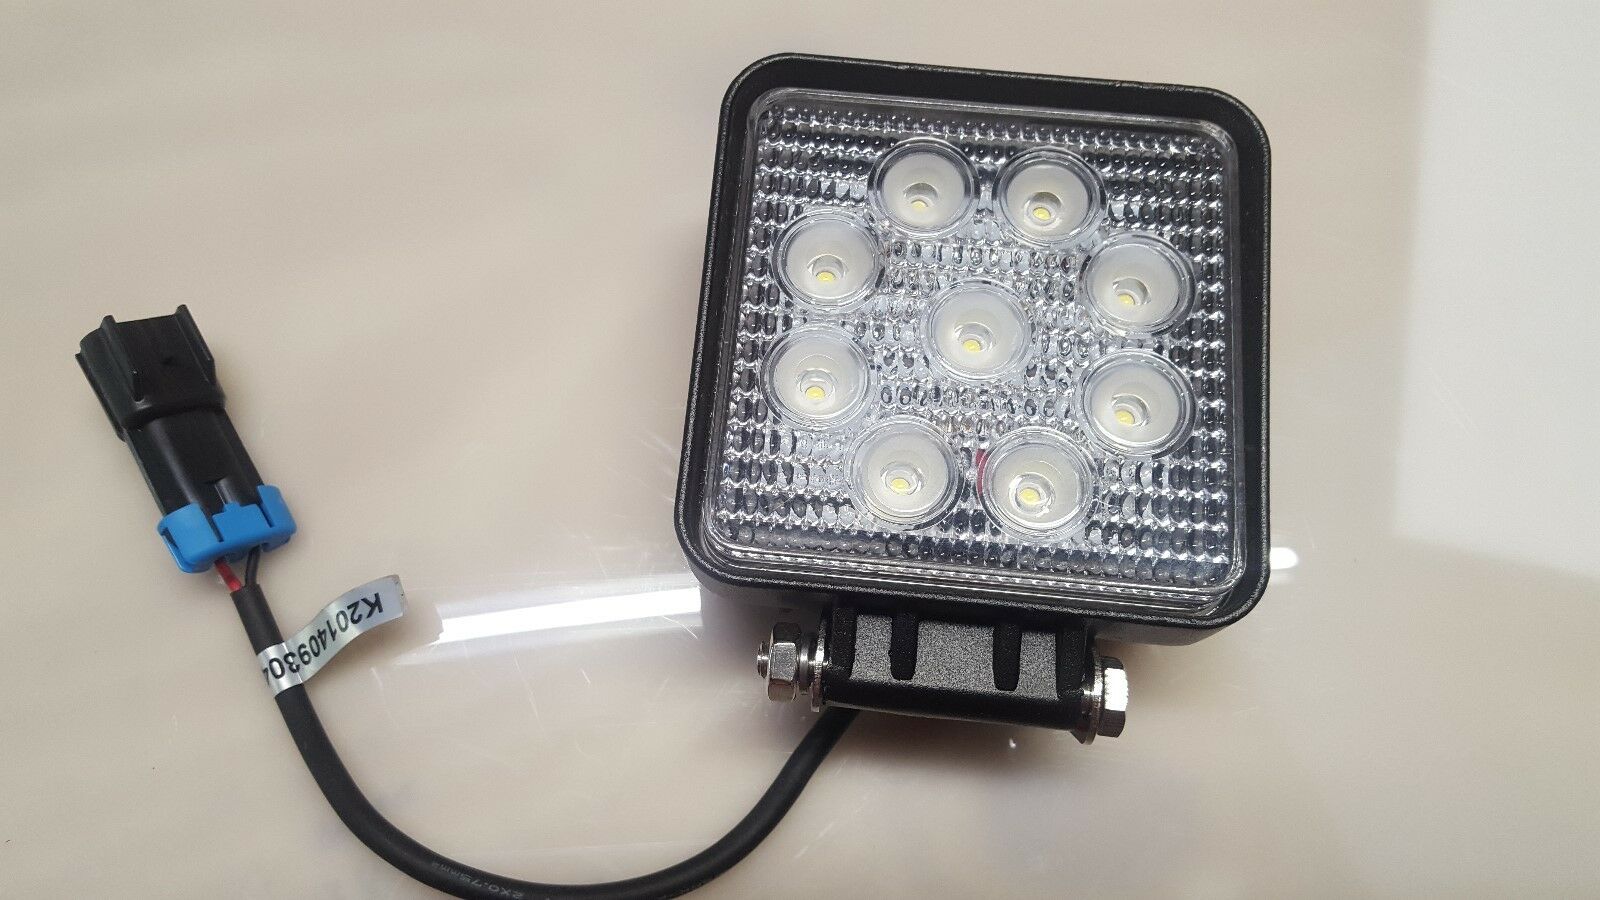 2018 -21 Polaris Ranger Xp 1000 Back-up Light With Factory Plug No Holes